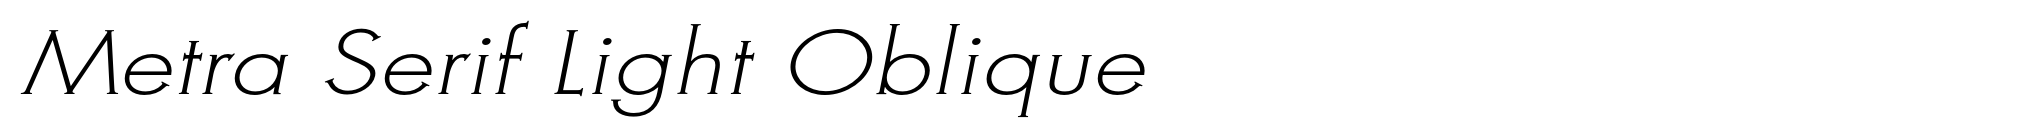 Metra Serif Light Oblique image